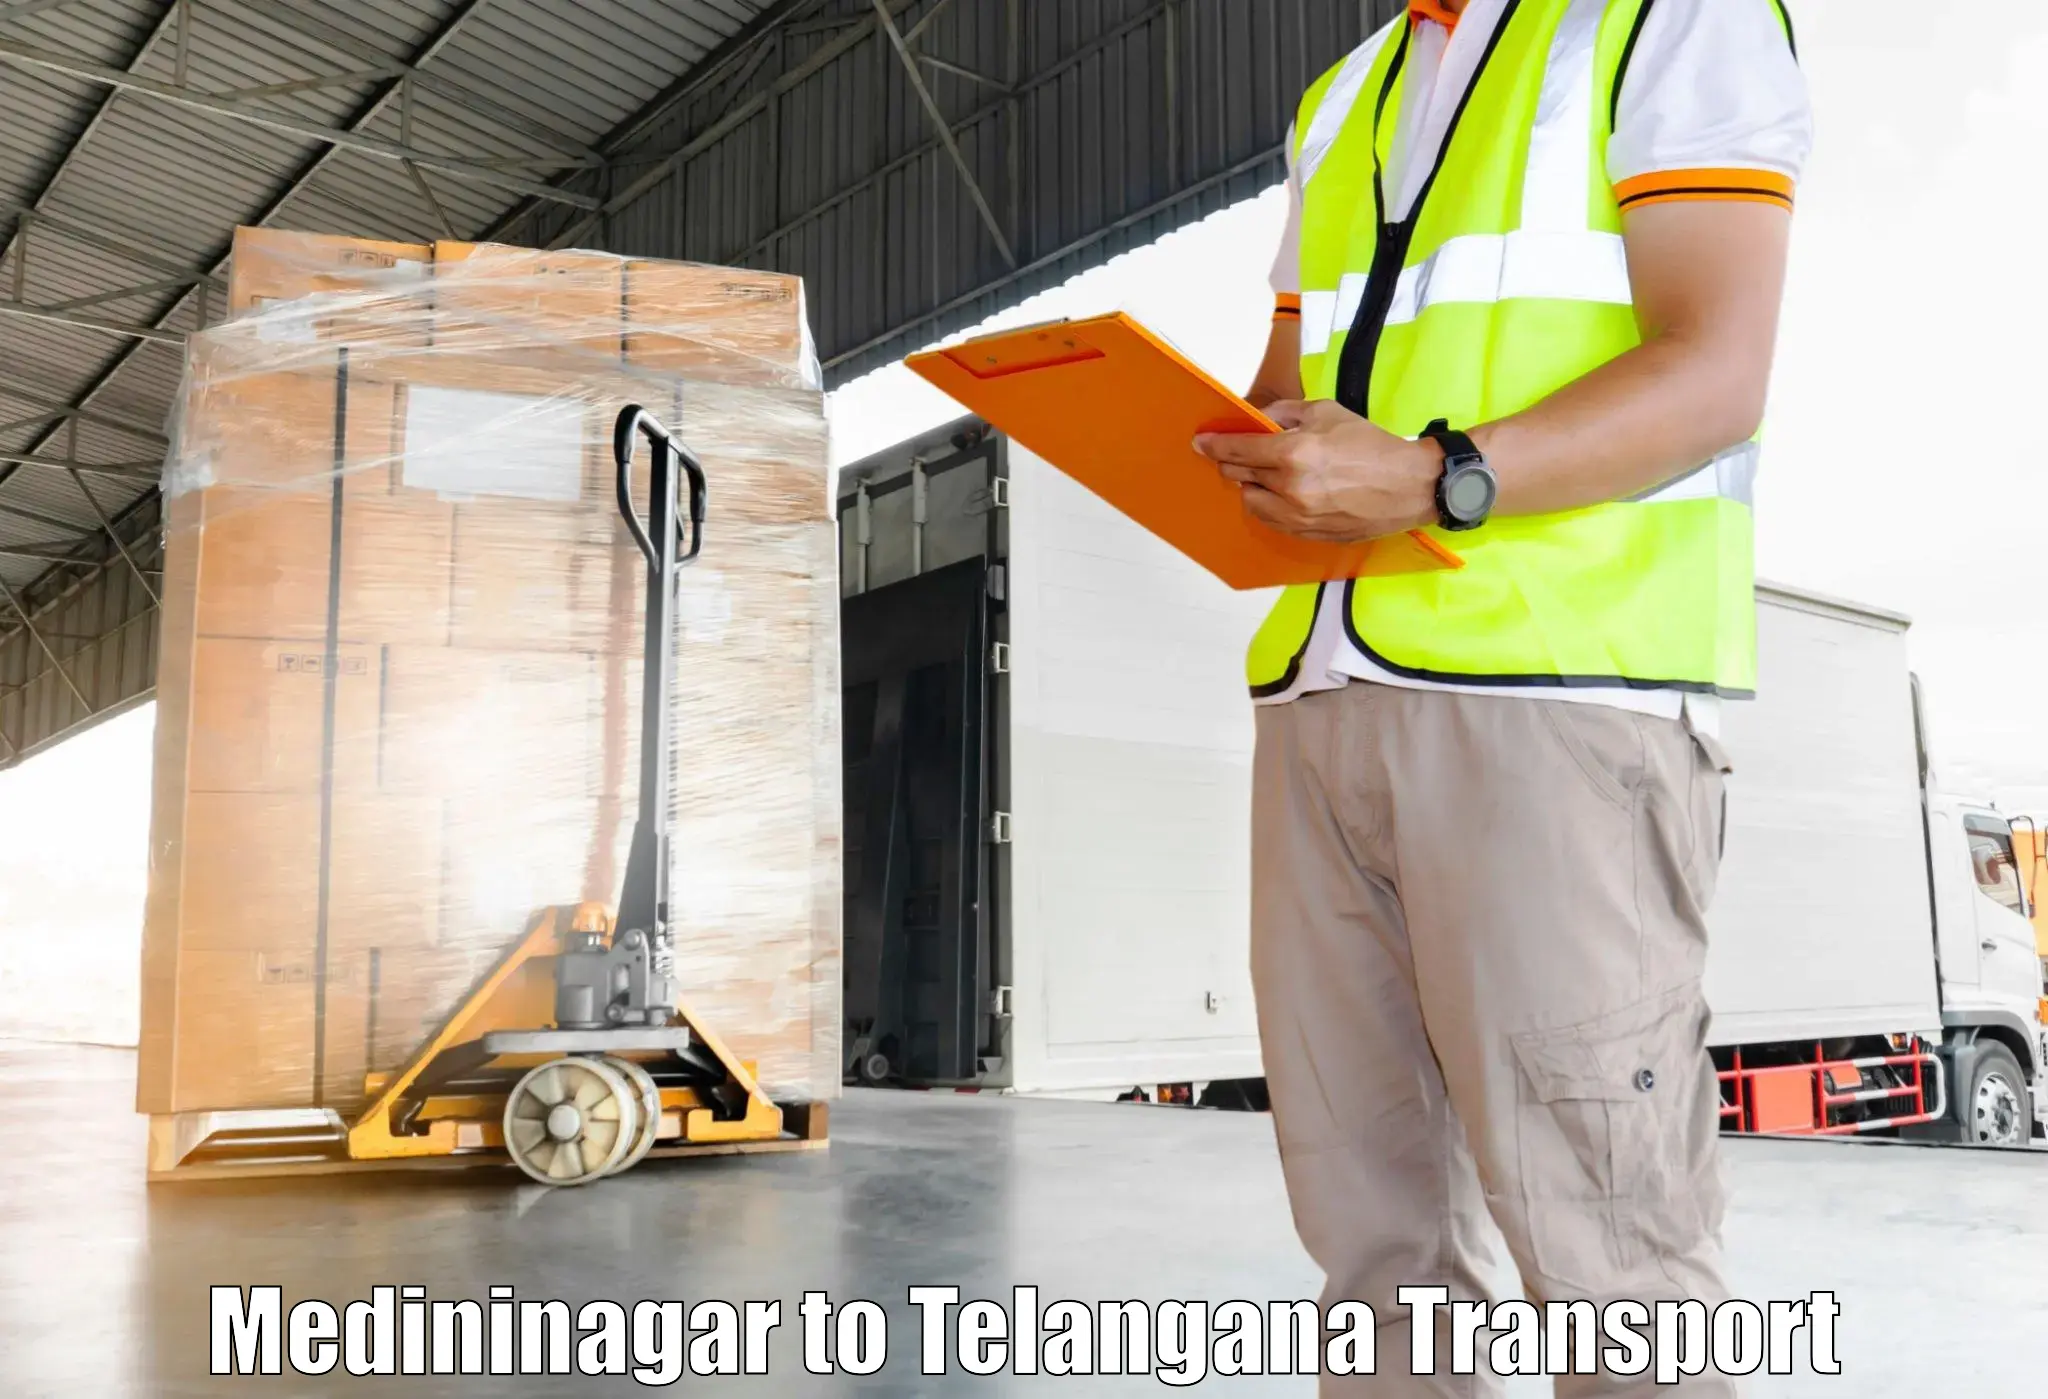 Truck transport companies in India Medininagar to Ibrahimpatnam